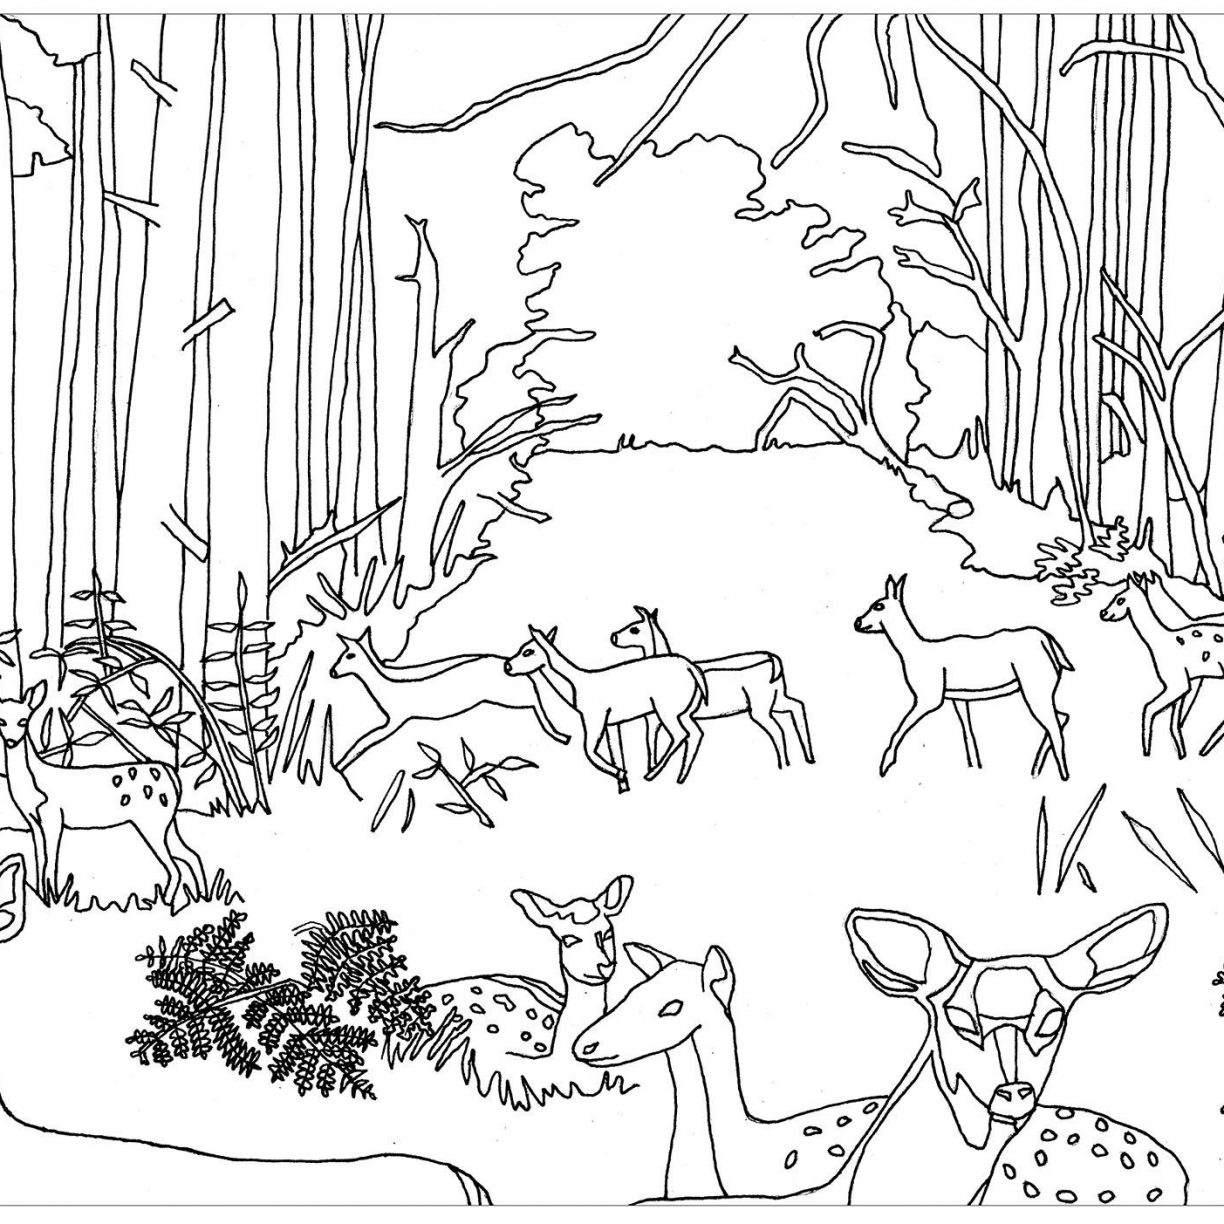 Рисунок лес и его обитатели раскраска